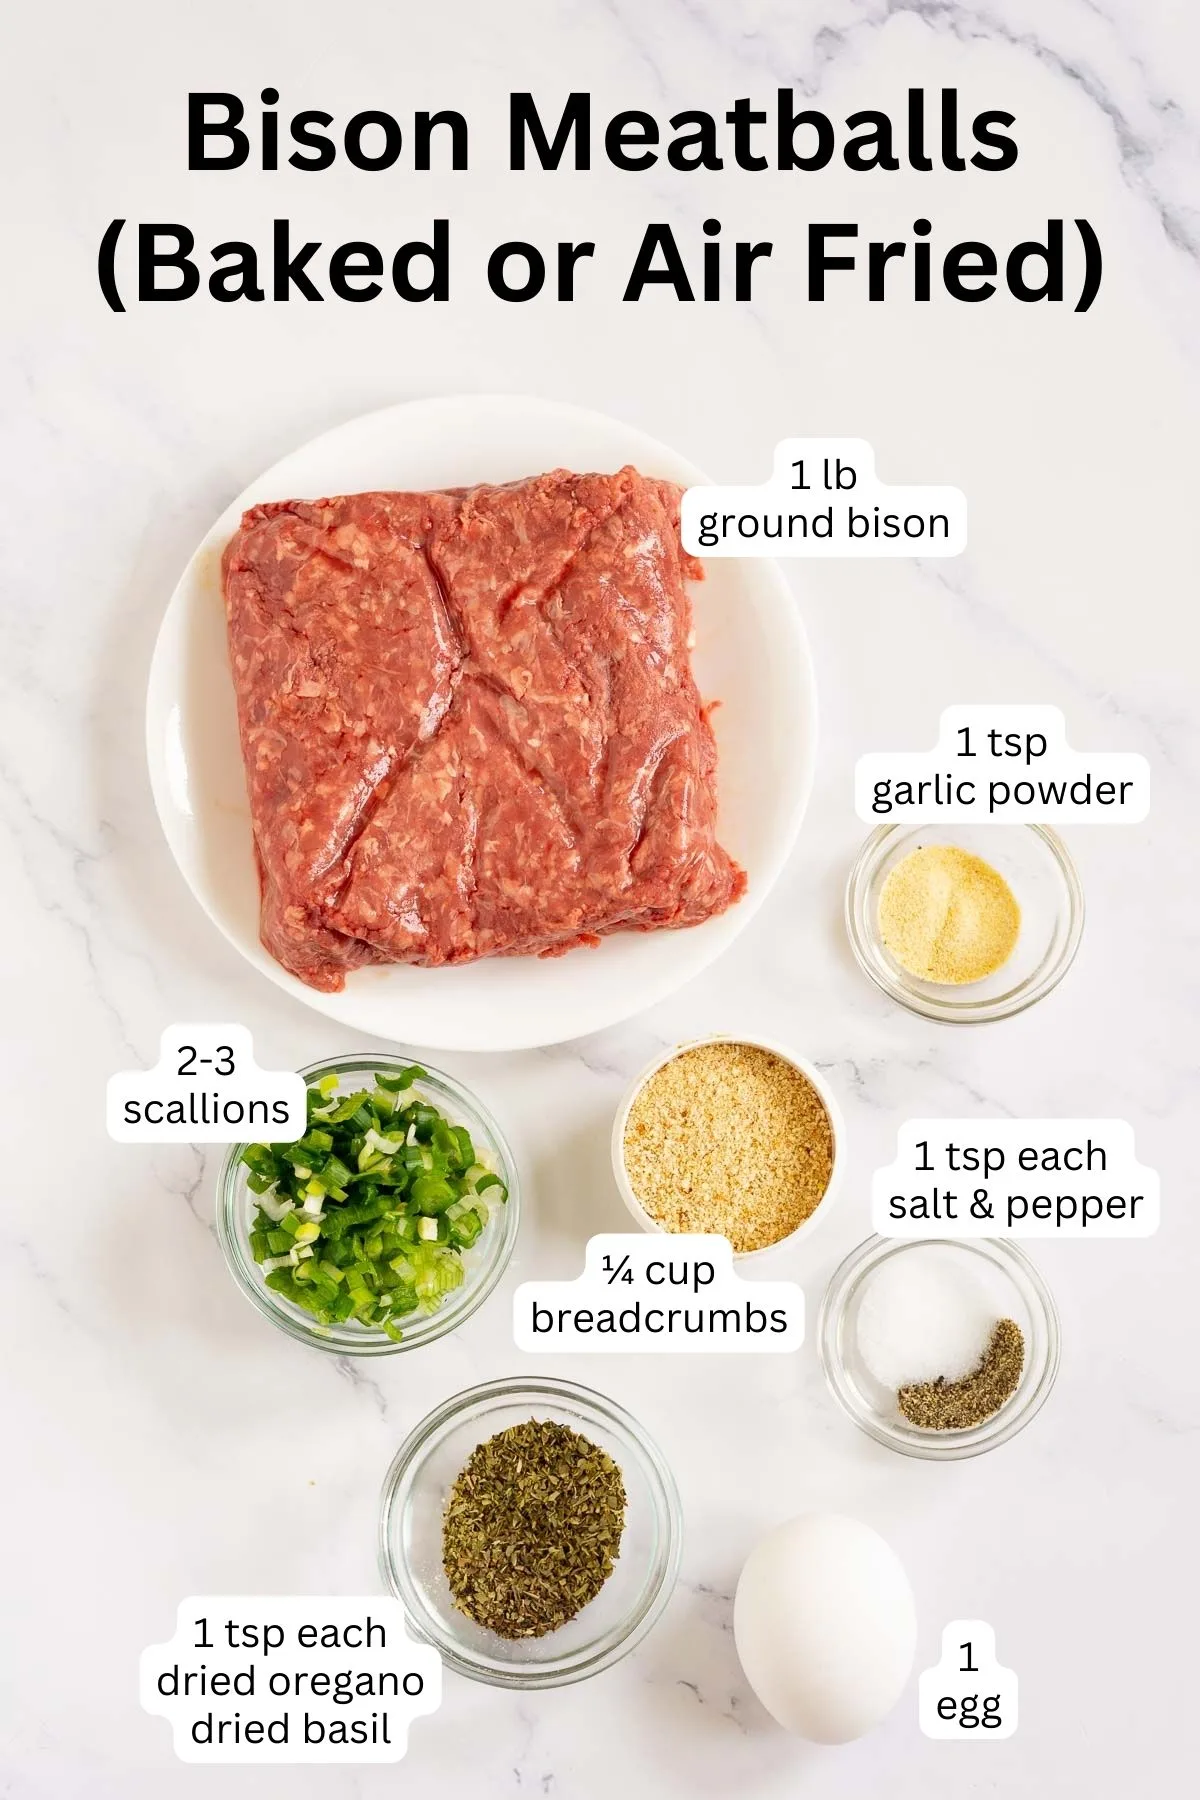 Ingredients for bison meatballs